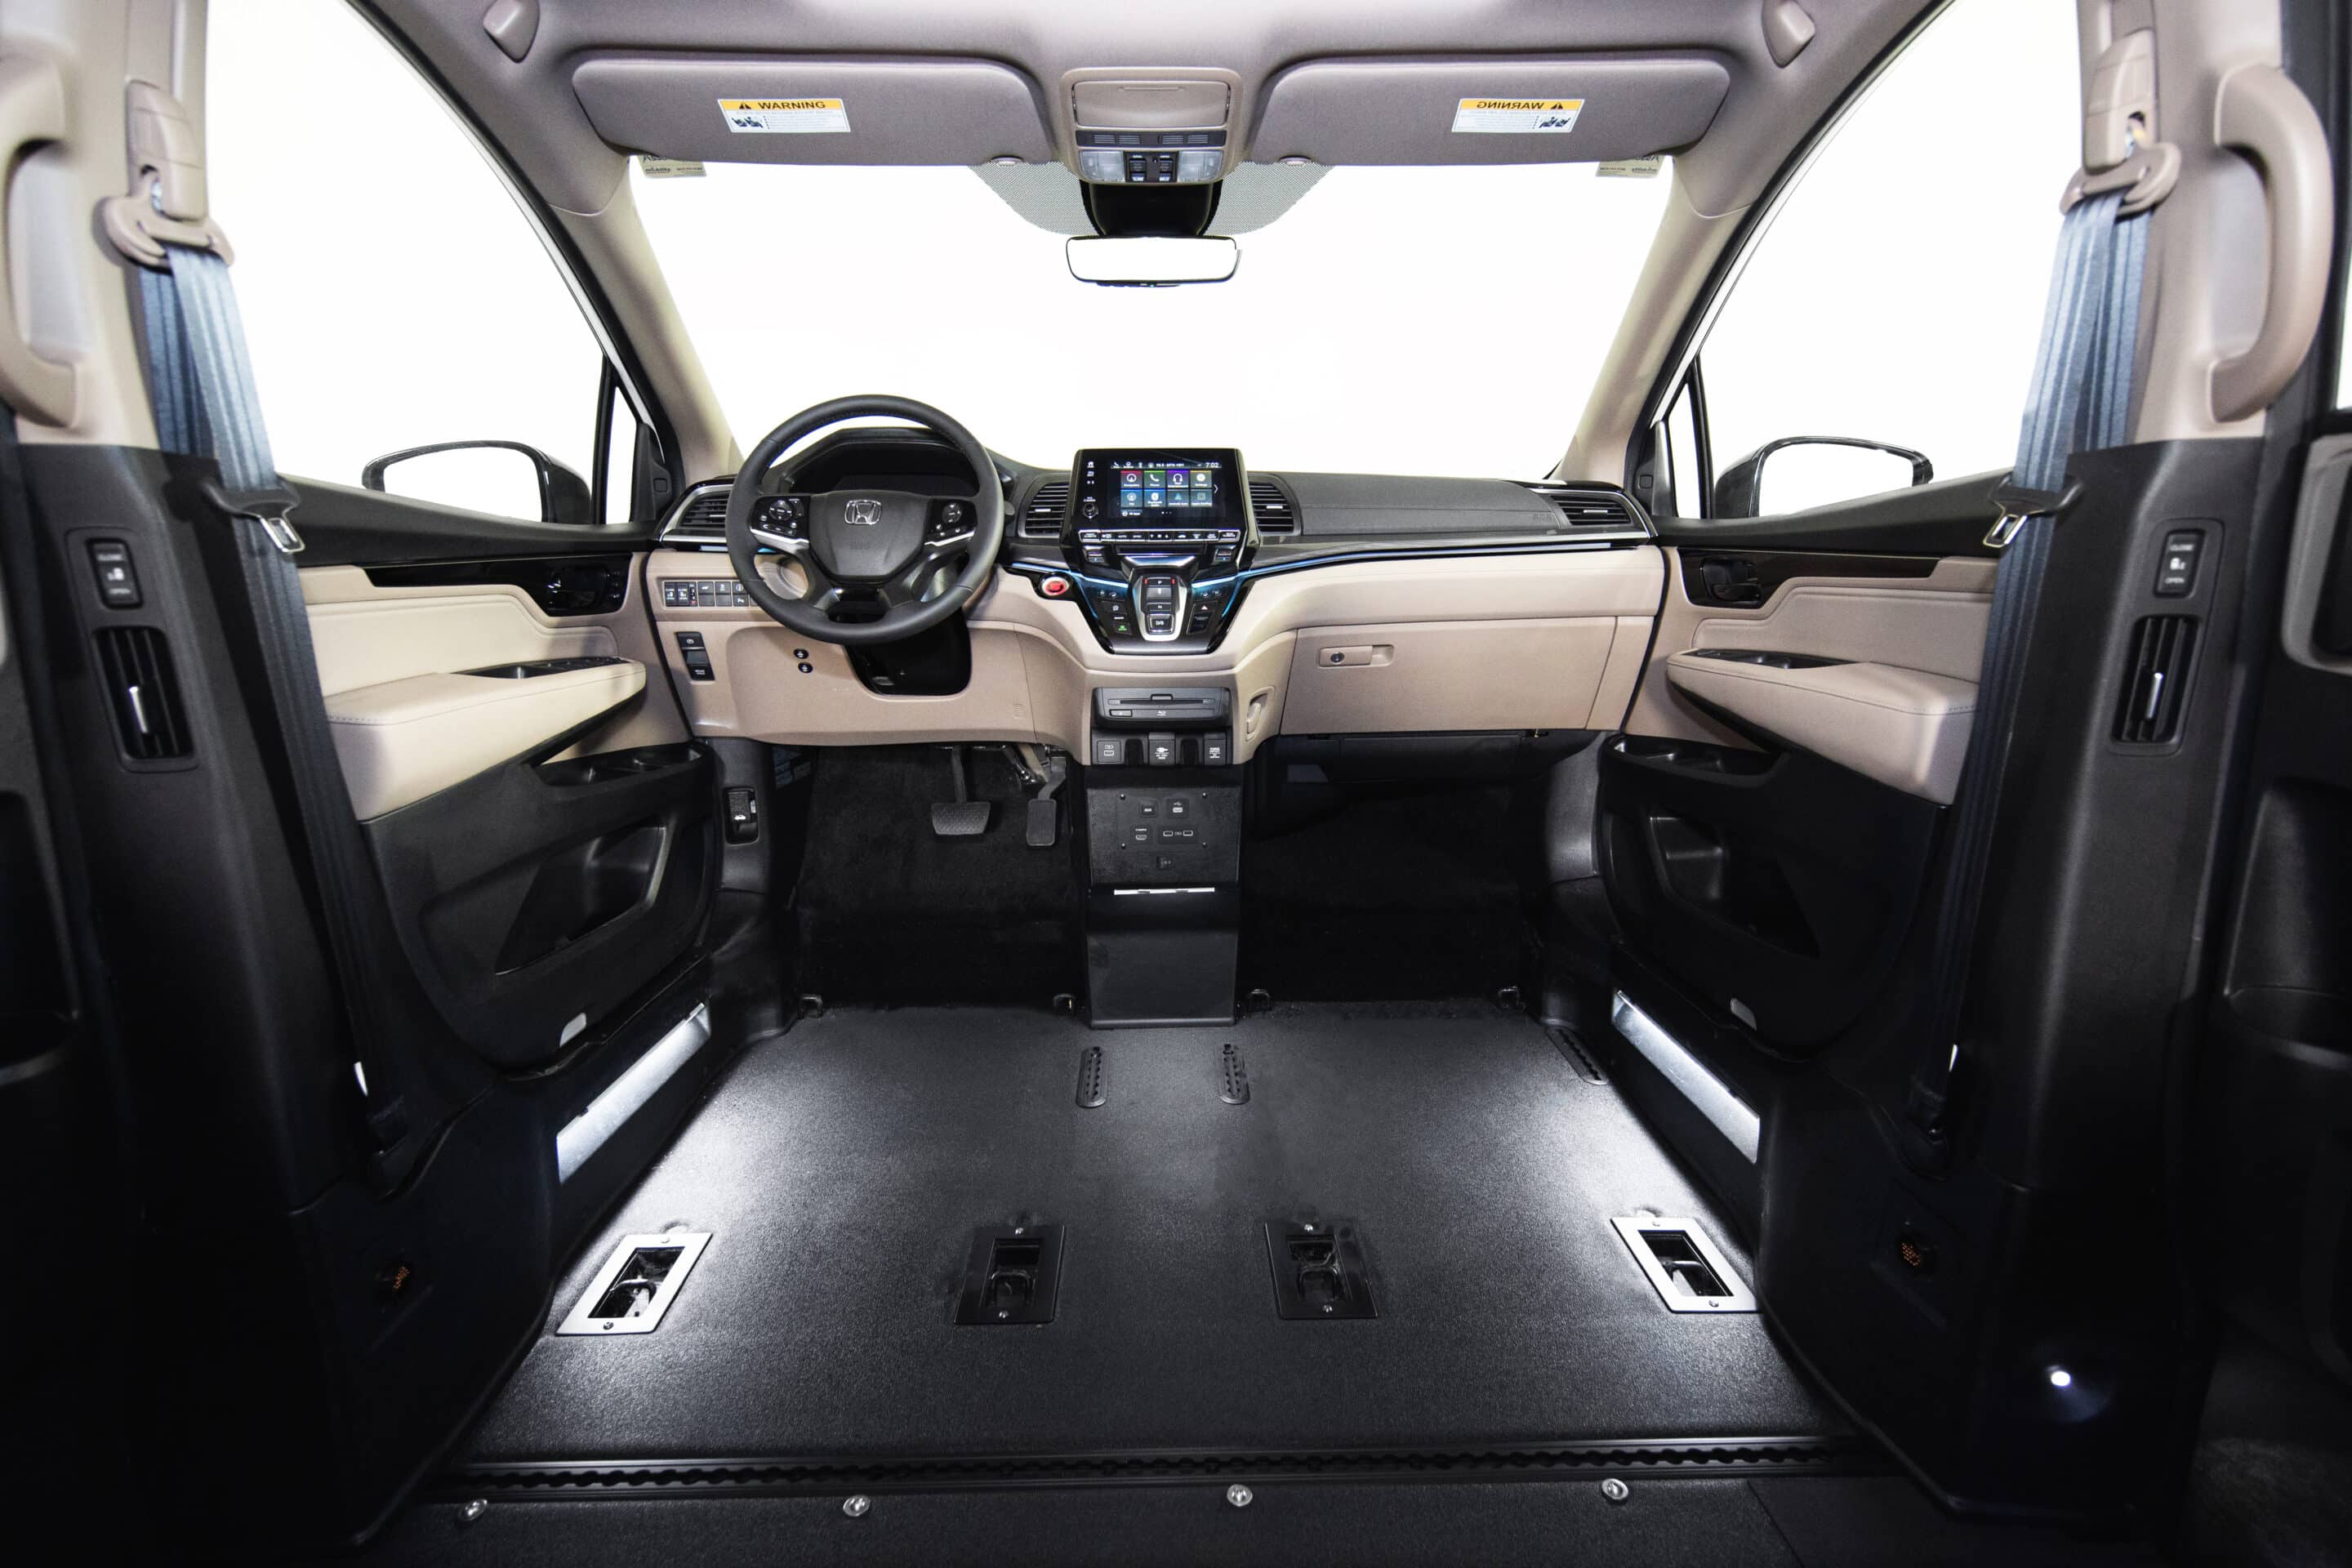 Honda Odyssey mobility van interior; view from back of van